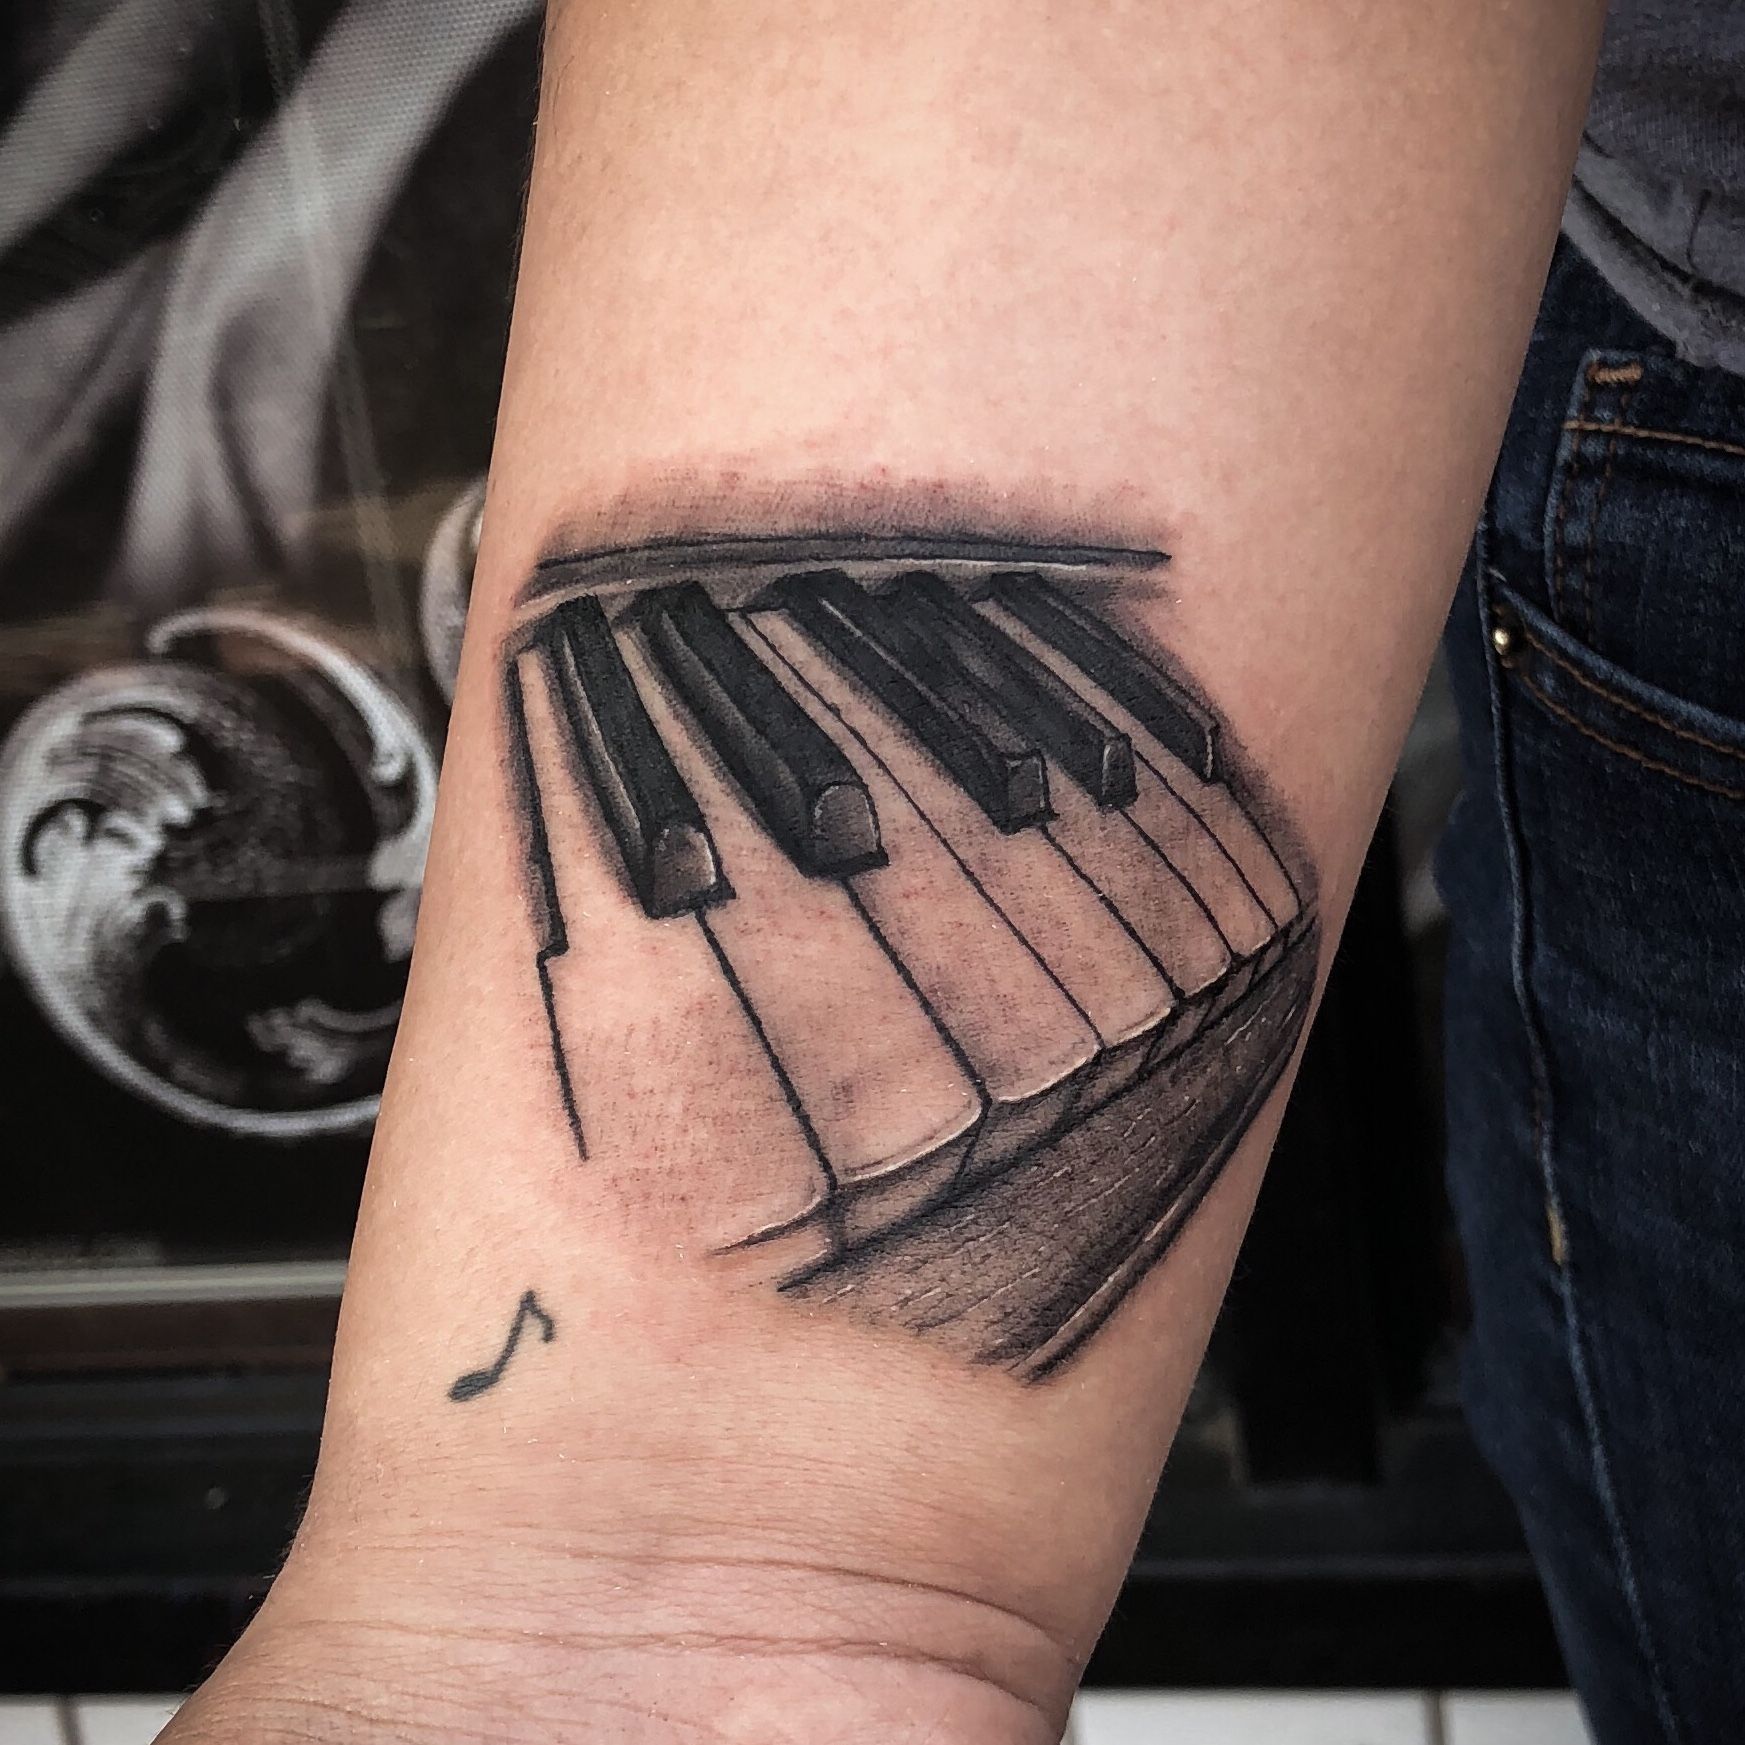 Piano tattoos